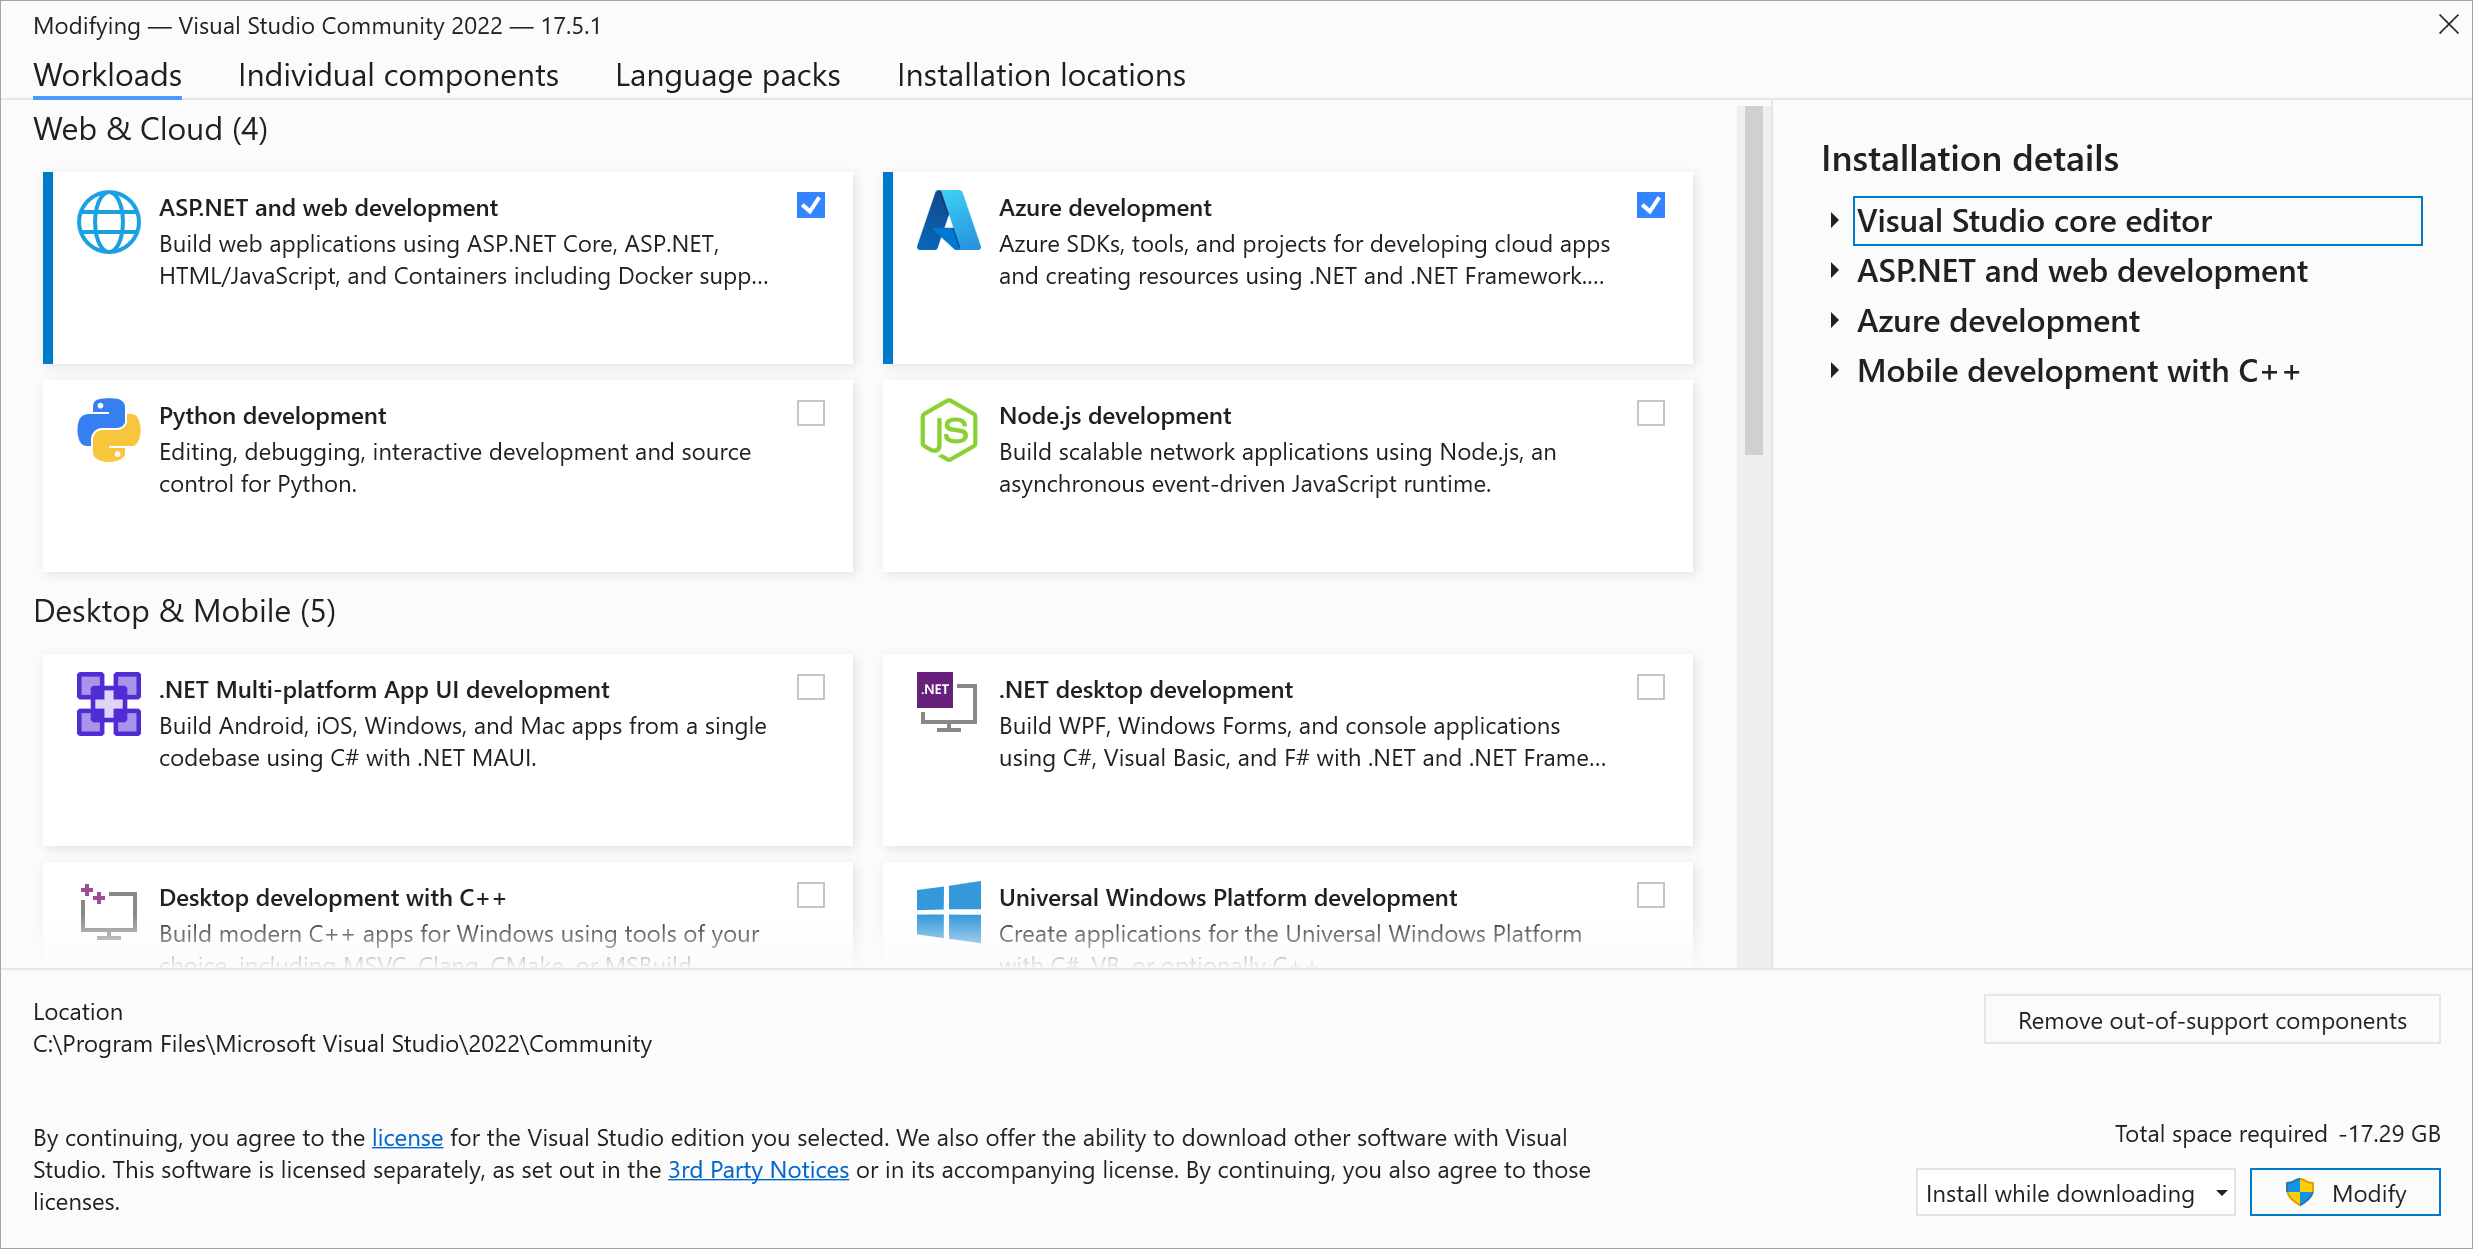 Screenshot of Modifying Visual Studio Community 2019 workloads tab with ASP.NET and web development and Azure development highlighted.